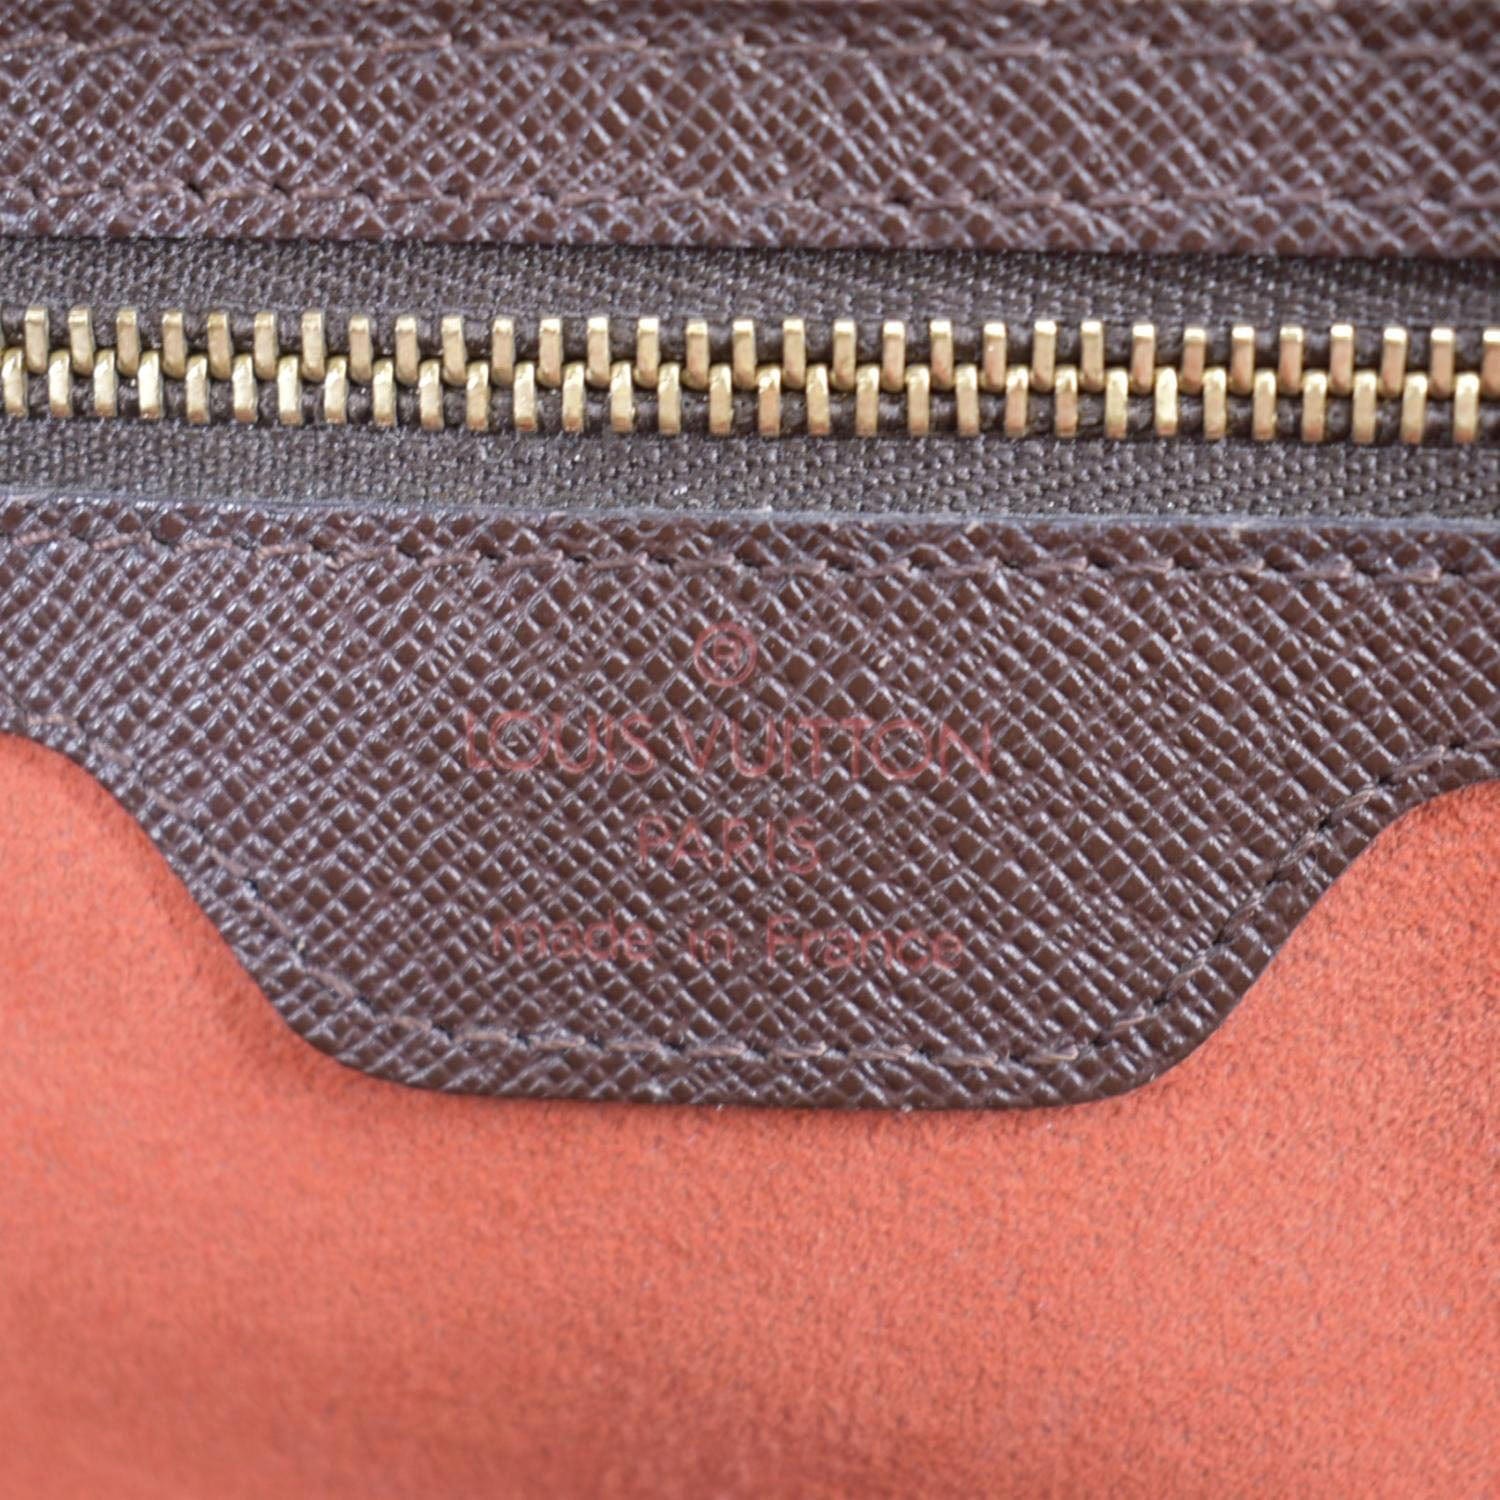 Louis Vuitton Triana Top Handle Handbag in Brown Damier Ebene, France 2000.